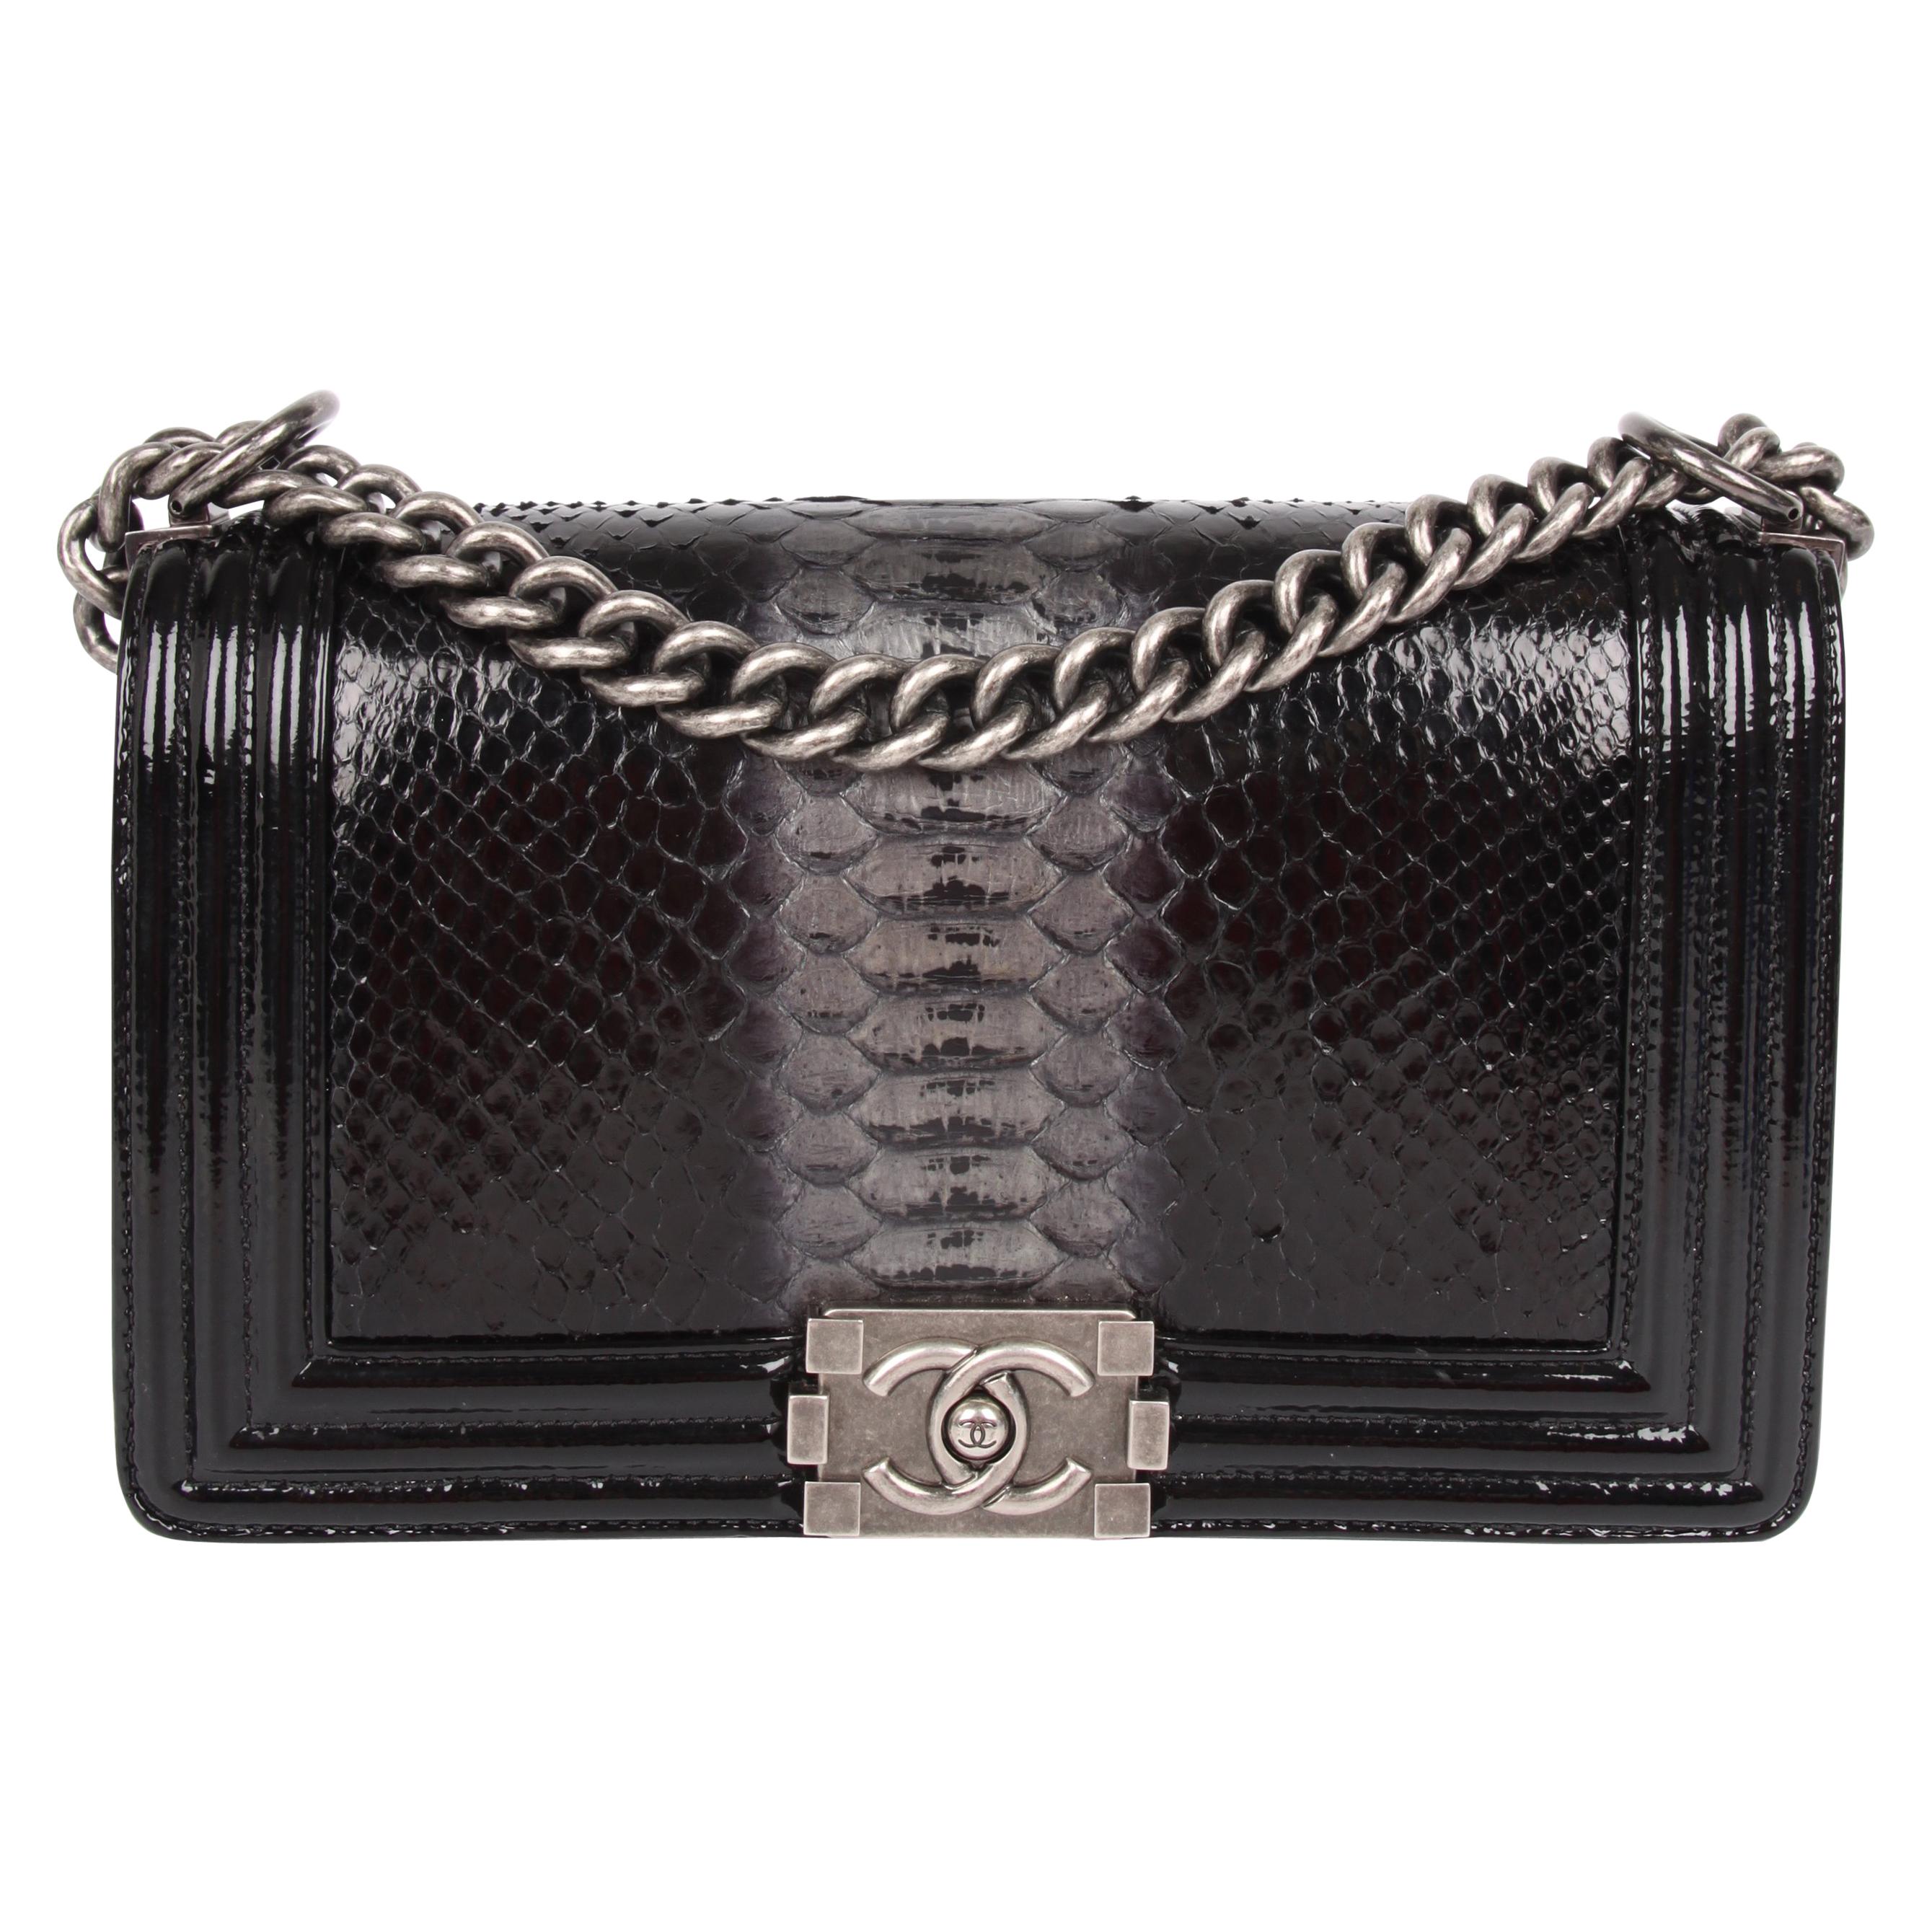 Chanel Le Boy Bag Python Leather Medium - black For Sale